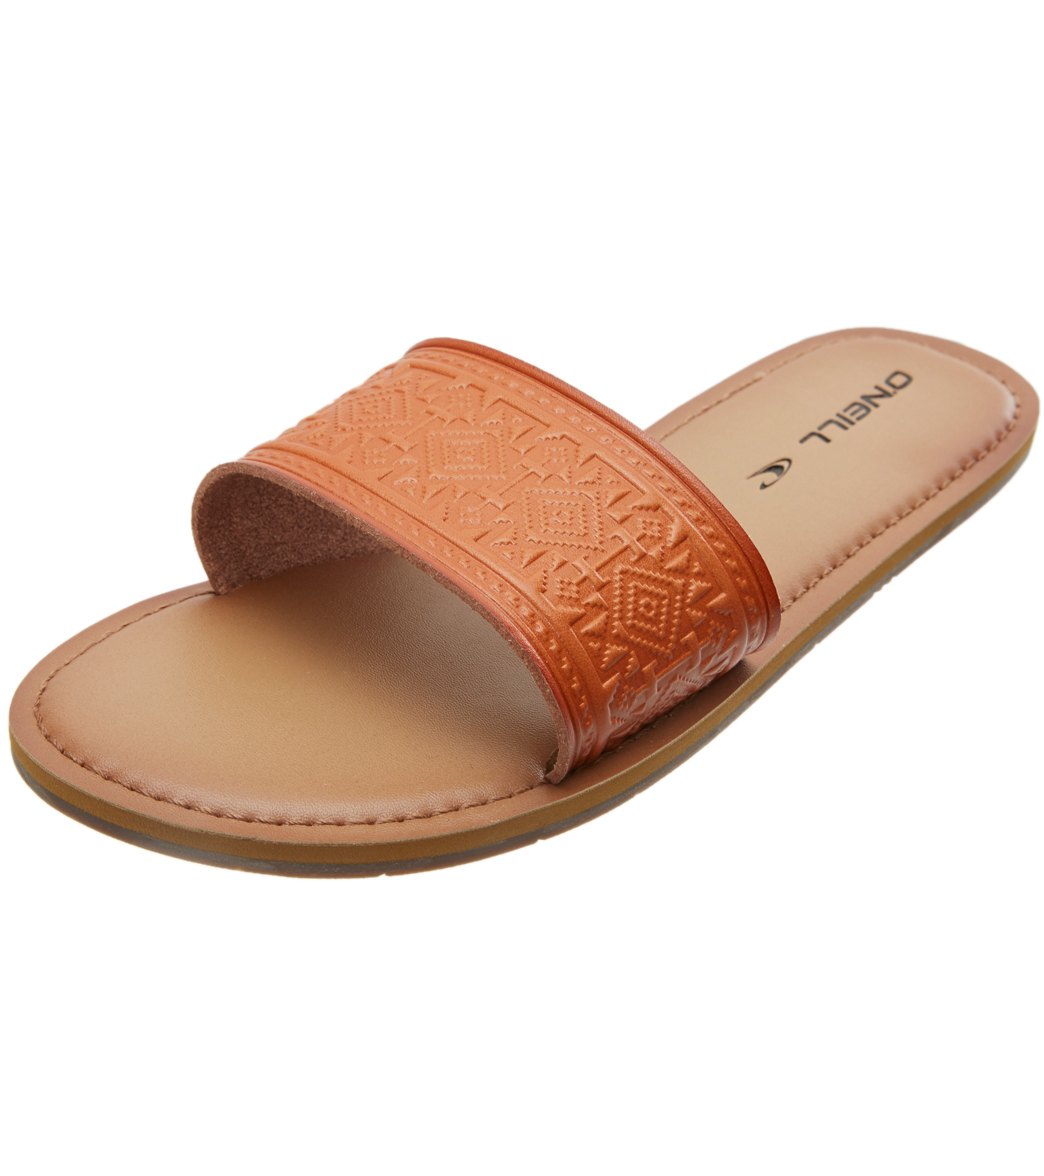 O'neill Women's Austin Slides Sandals - Cognac 7 - Swimoutlet.com